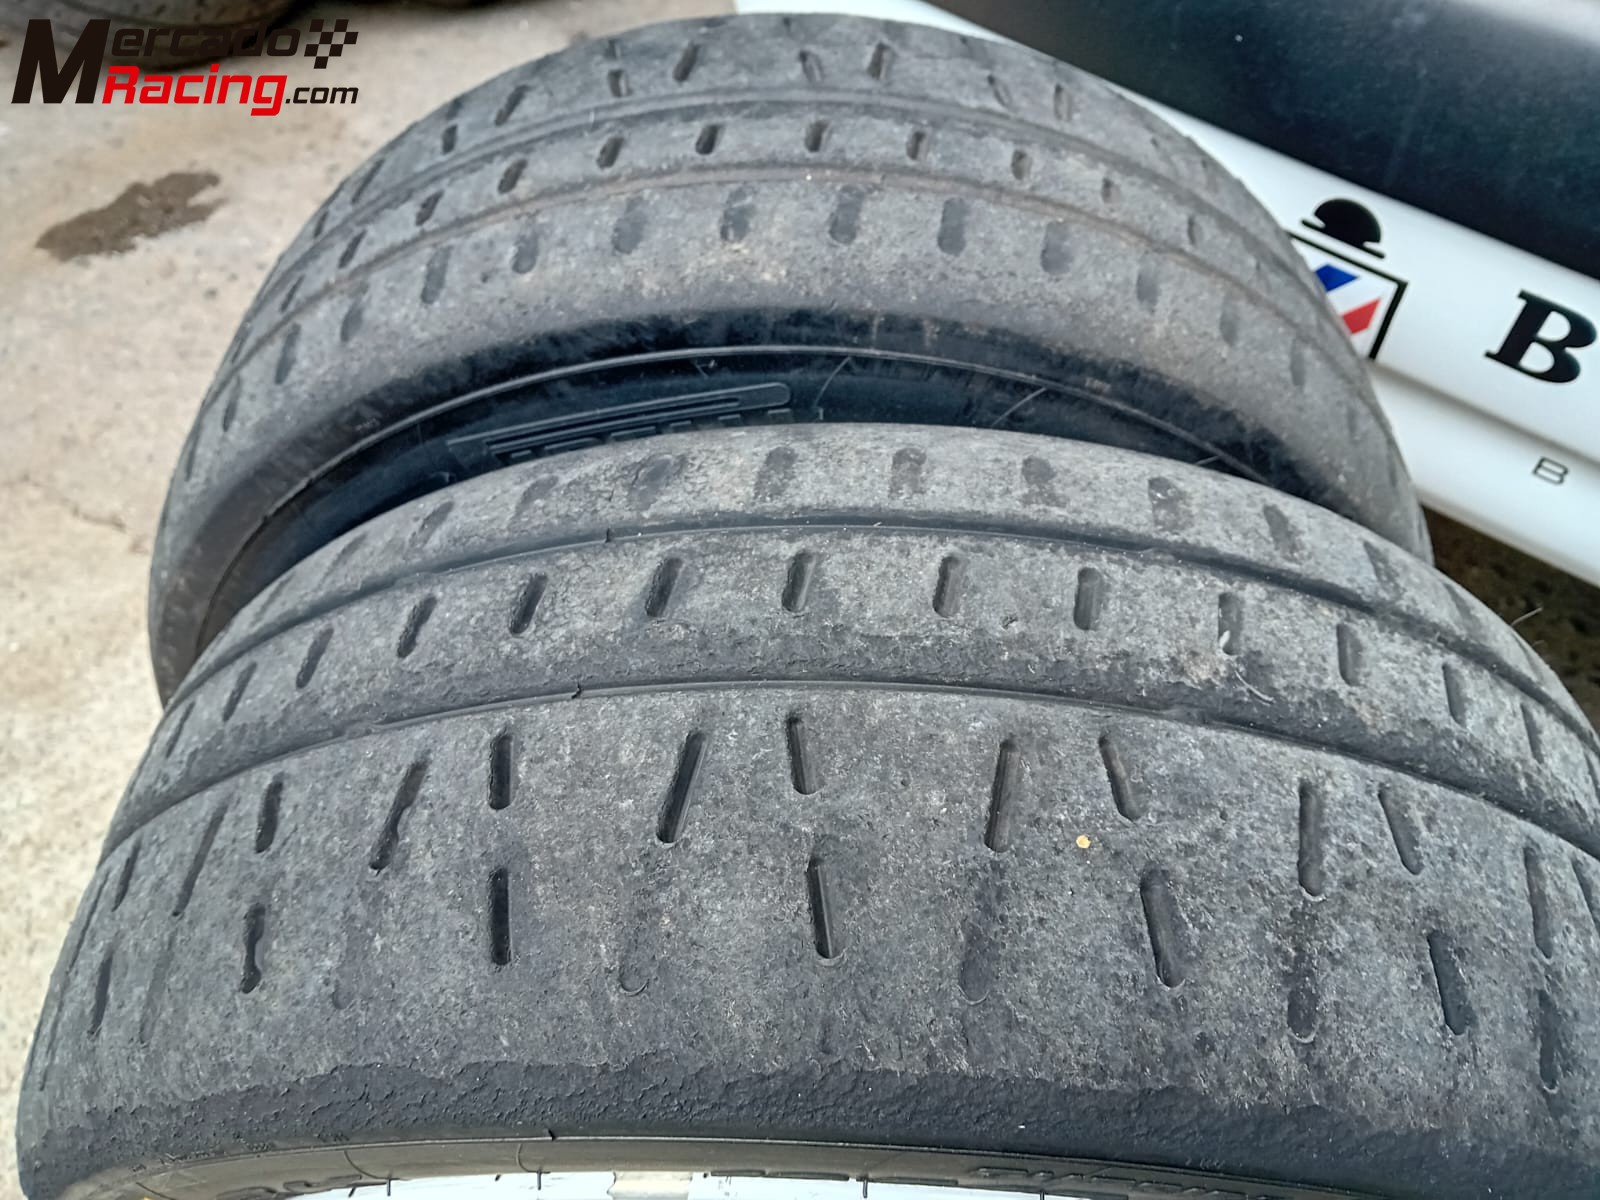 Neumáticos pirelly  rk7